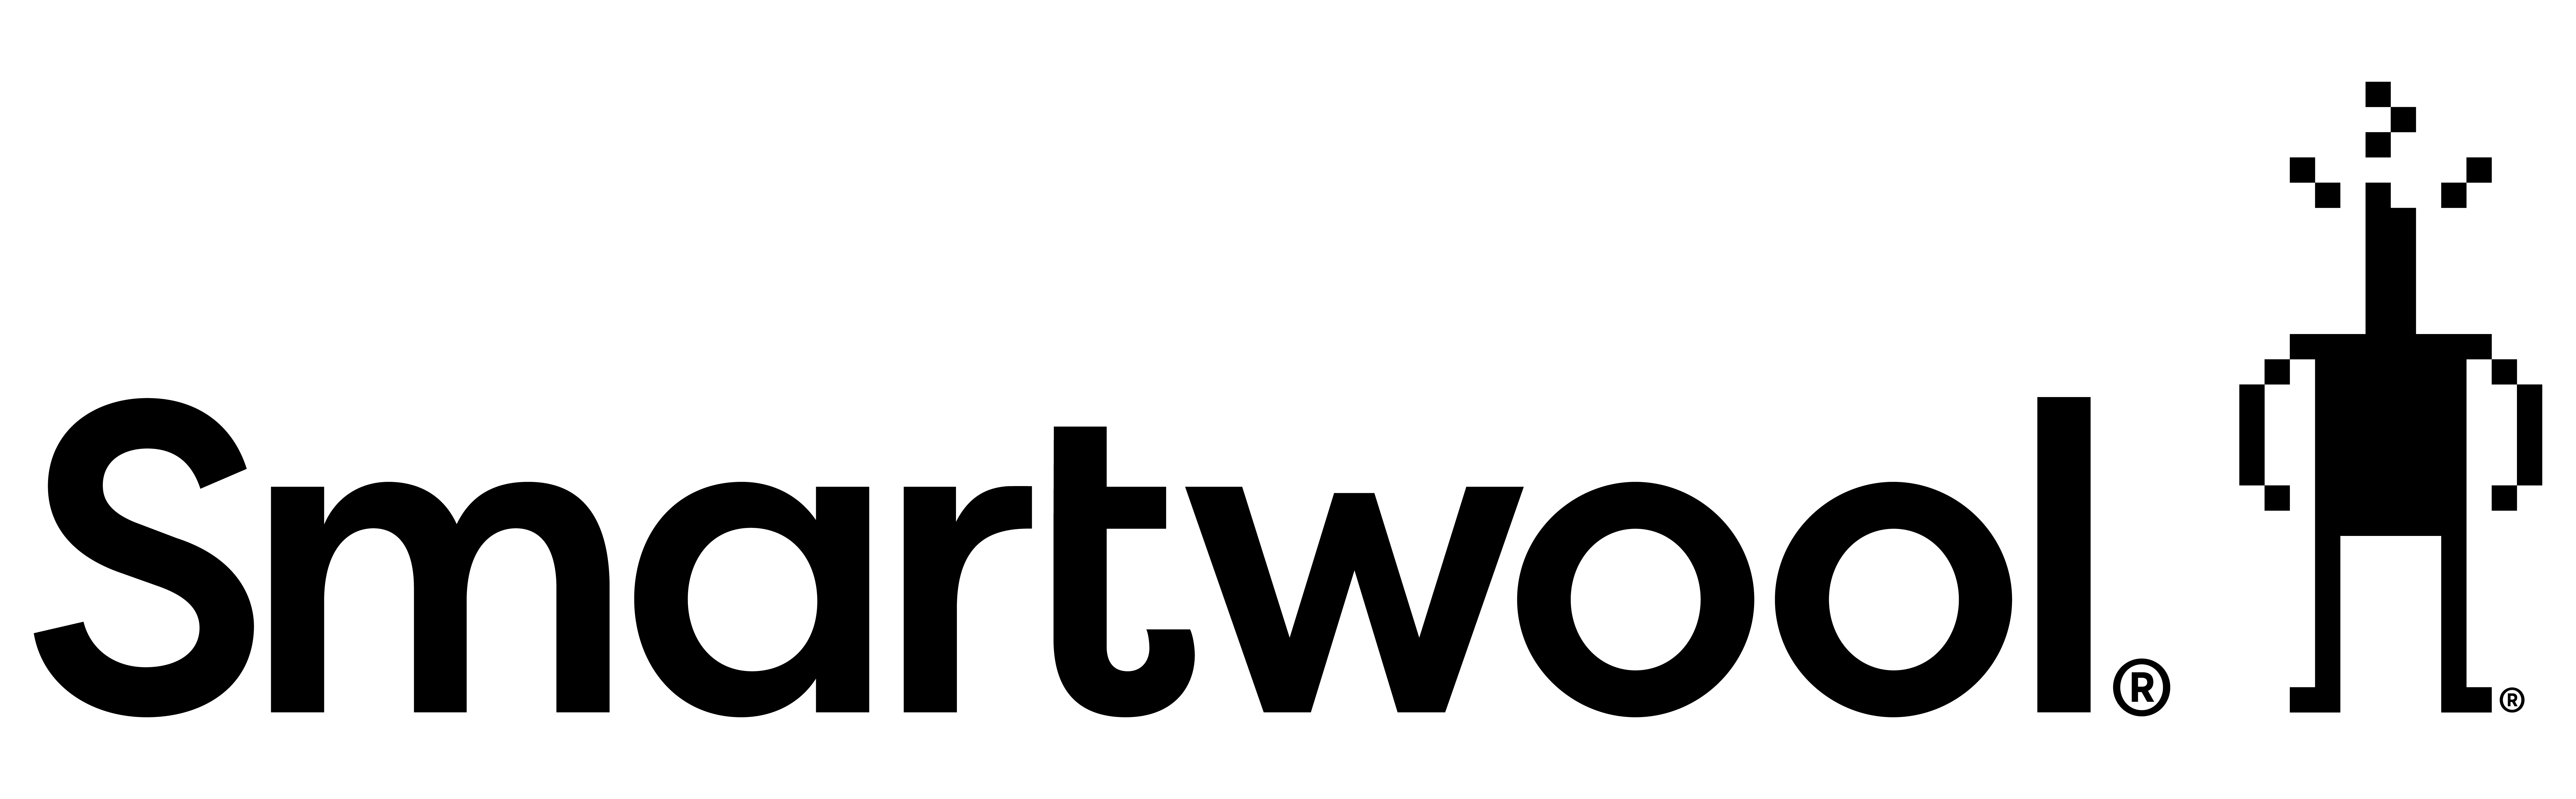 Smartwool_Logo_NoTagline_Black_RGB